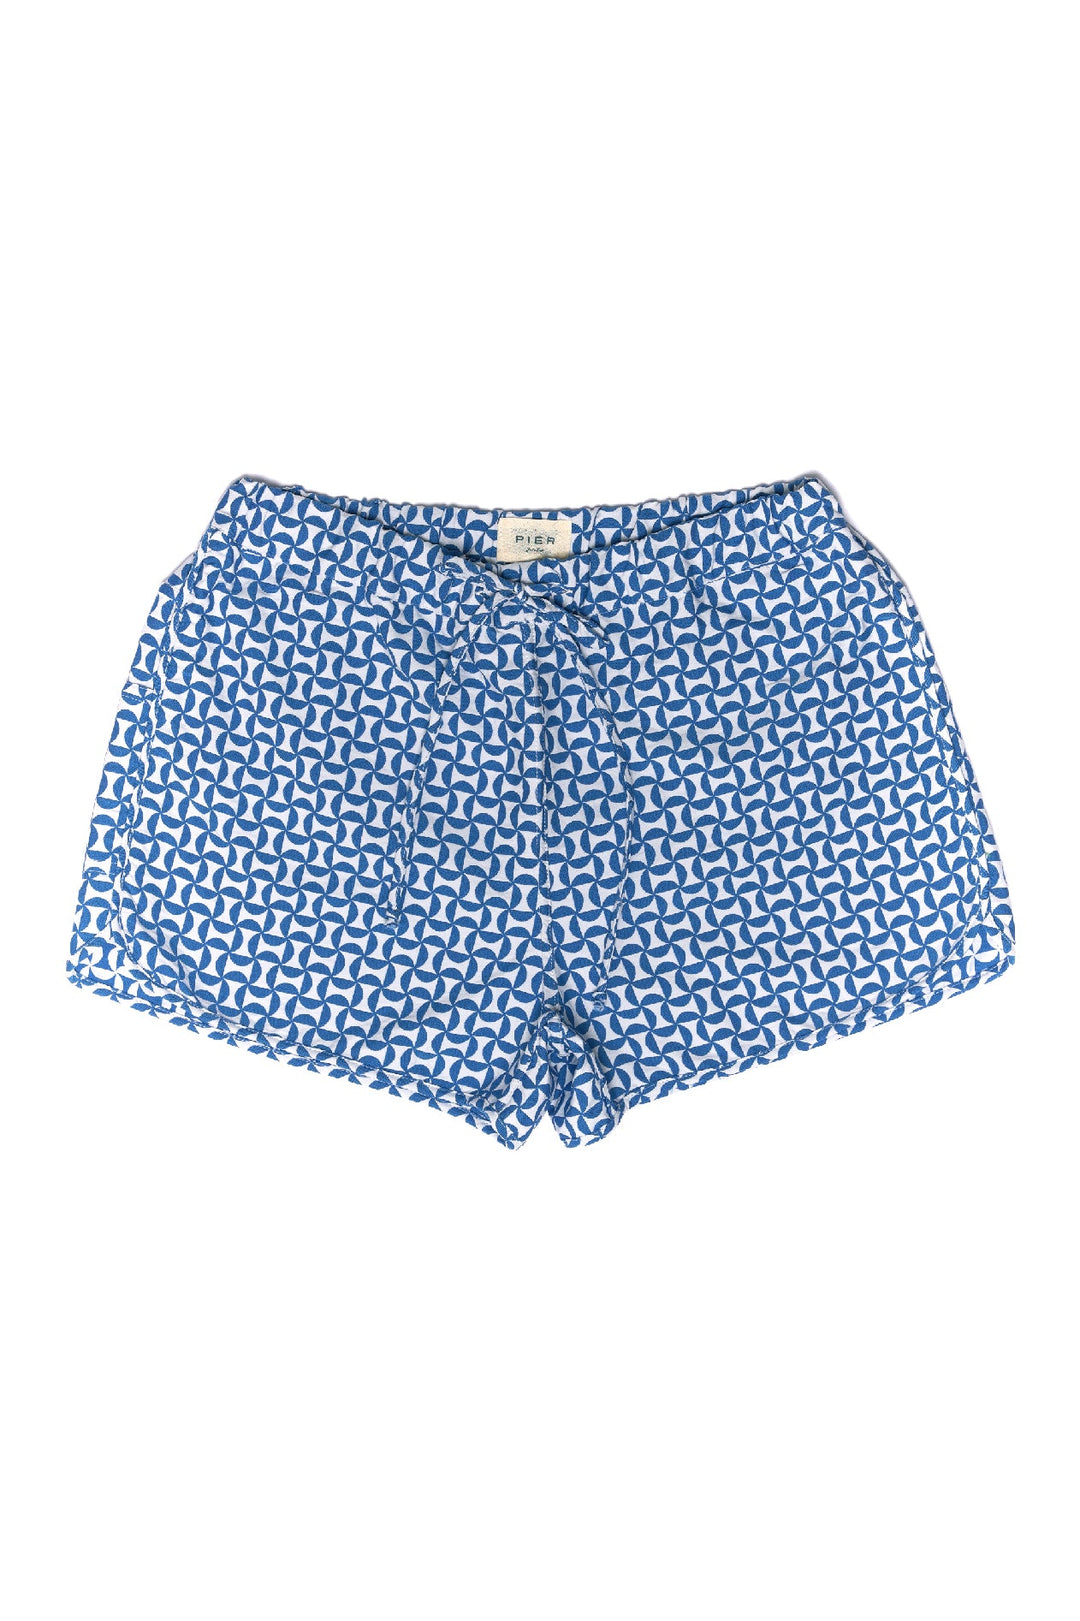 Blue and white geometric patterned men's swim shorts